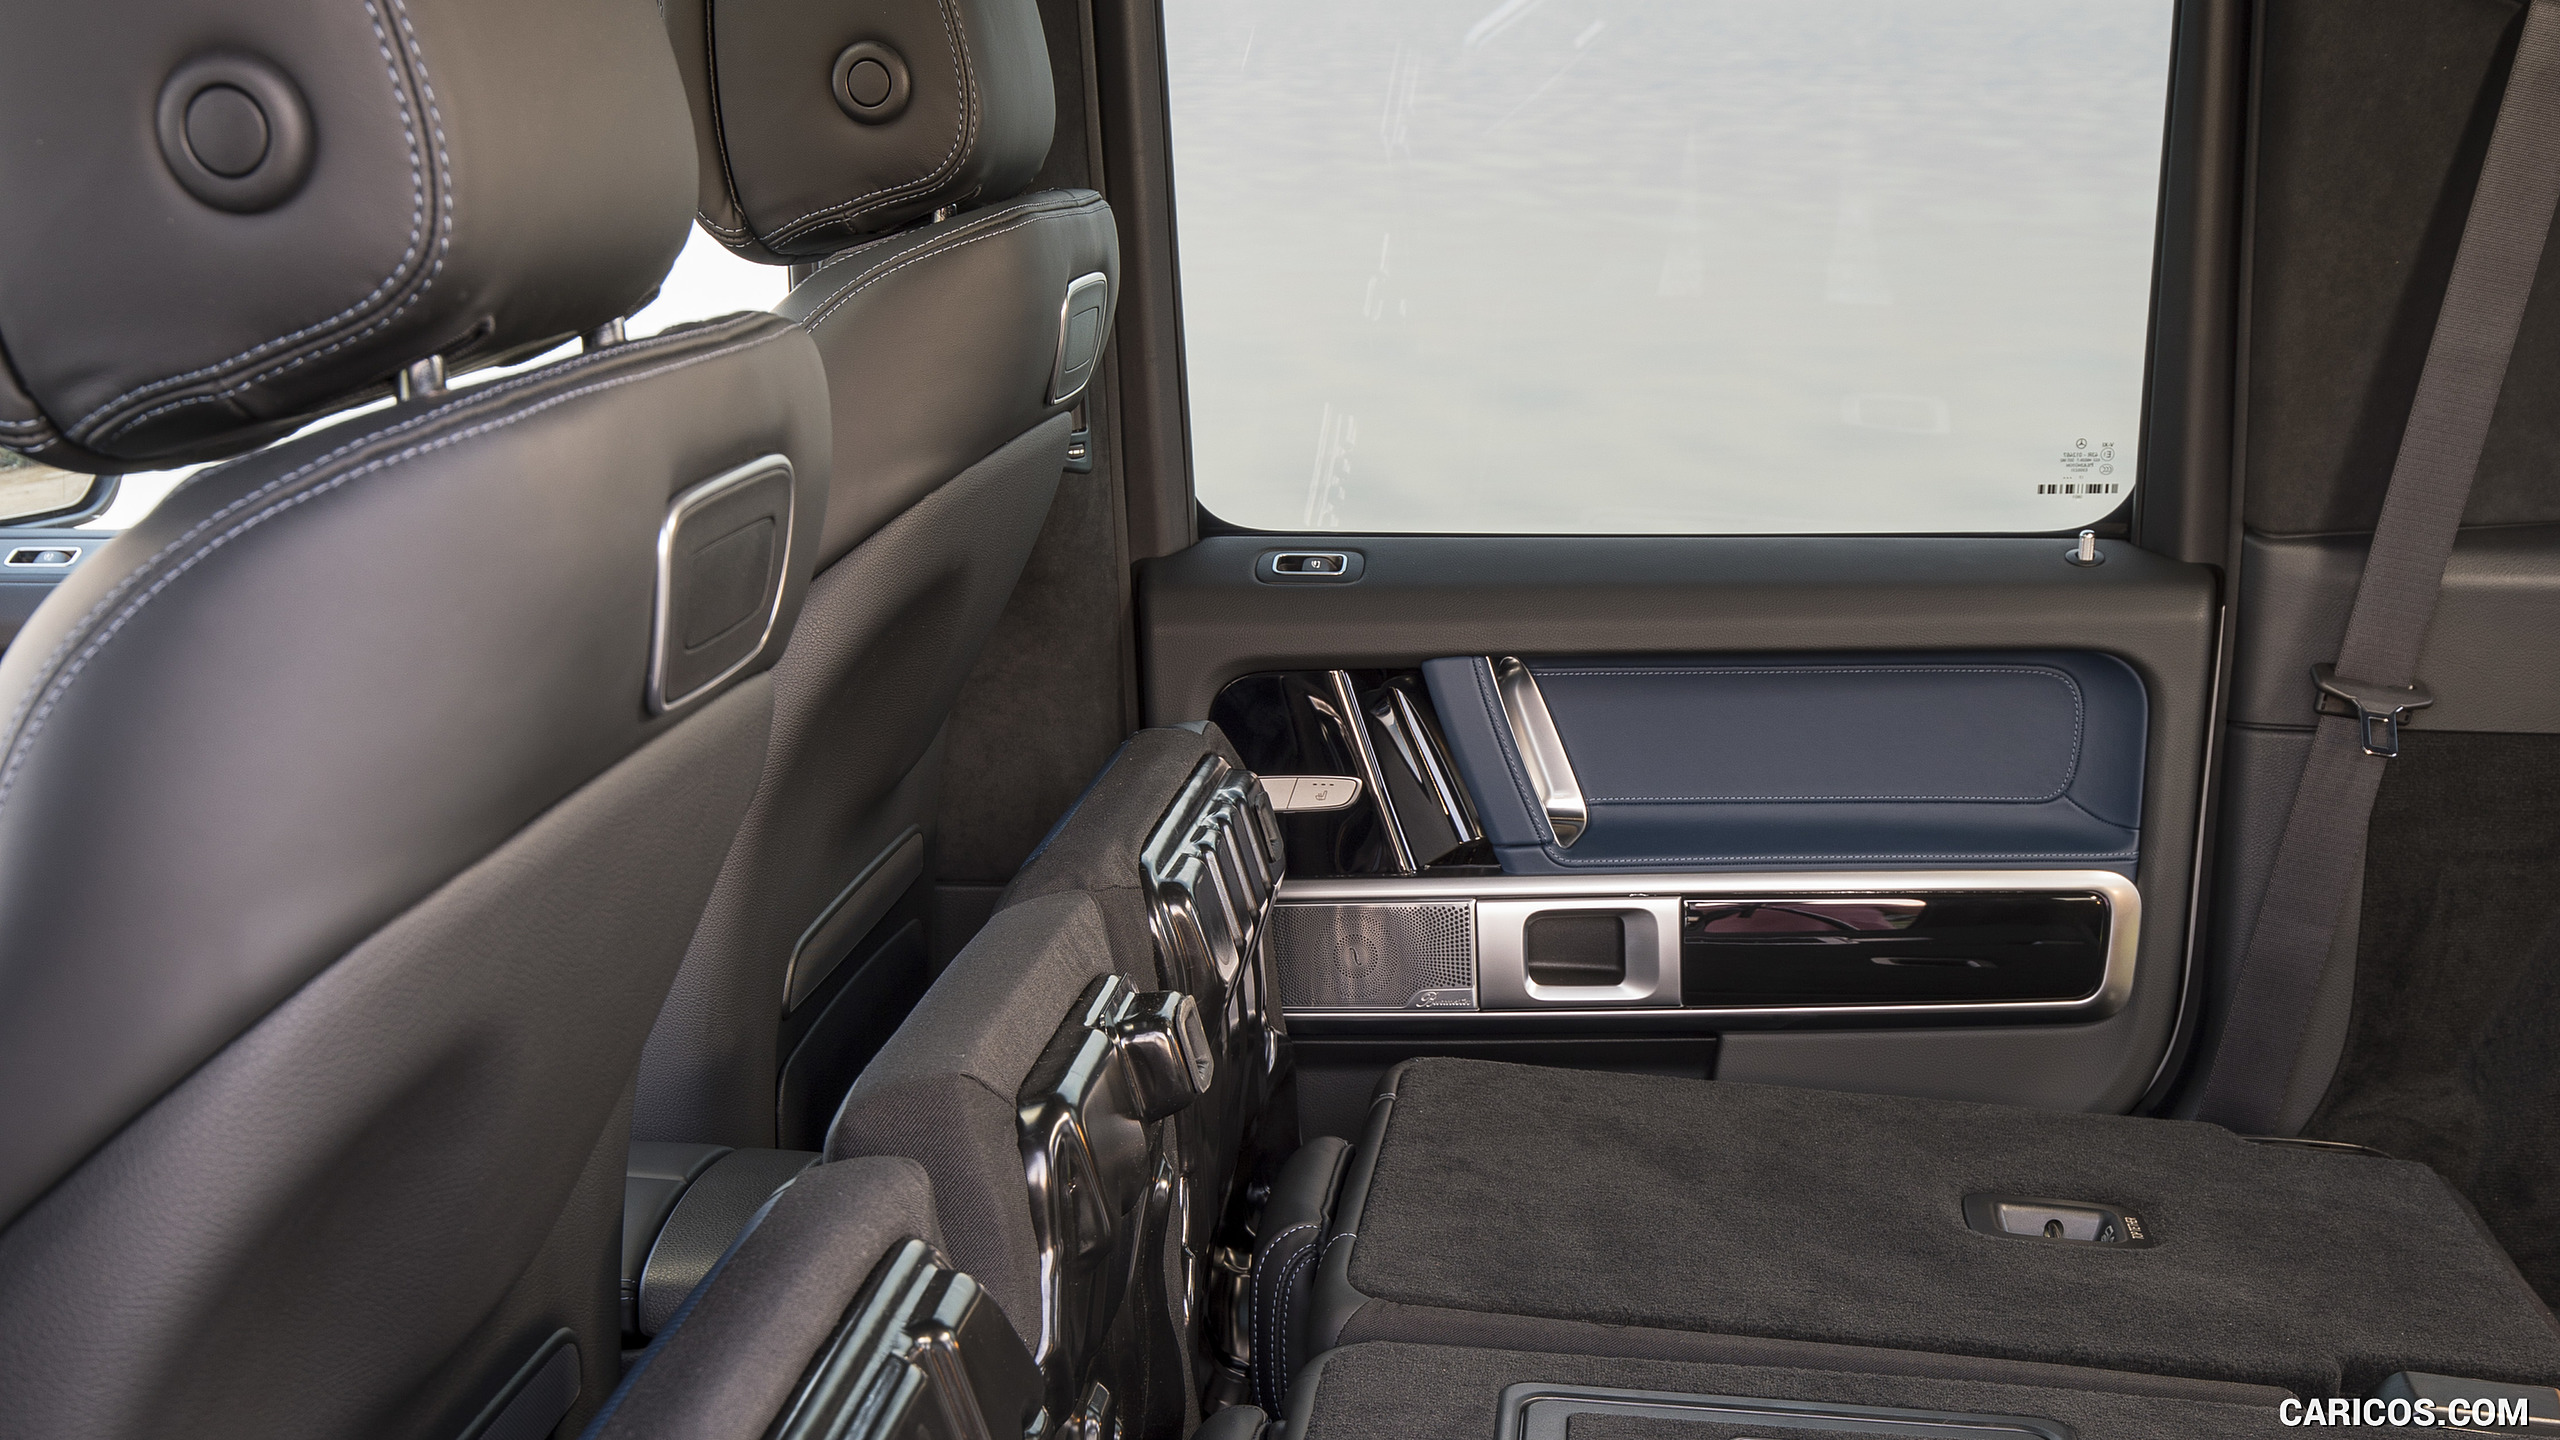 2019 Mercedes-AMG G63 - Interior, Rear Seats, #122 of 452